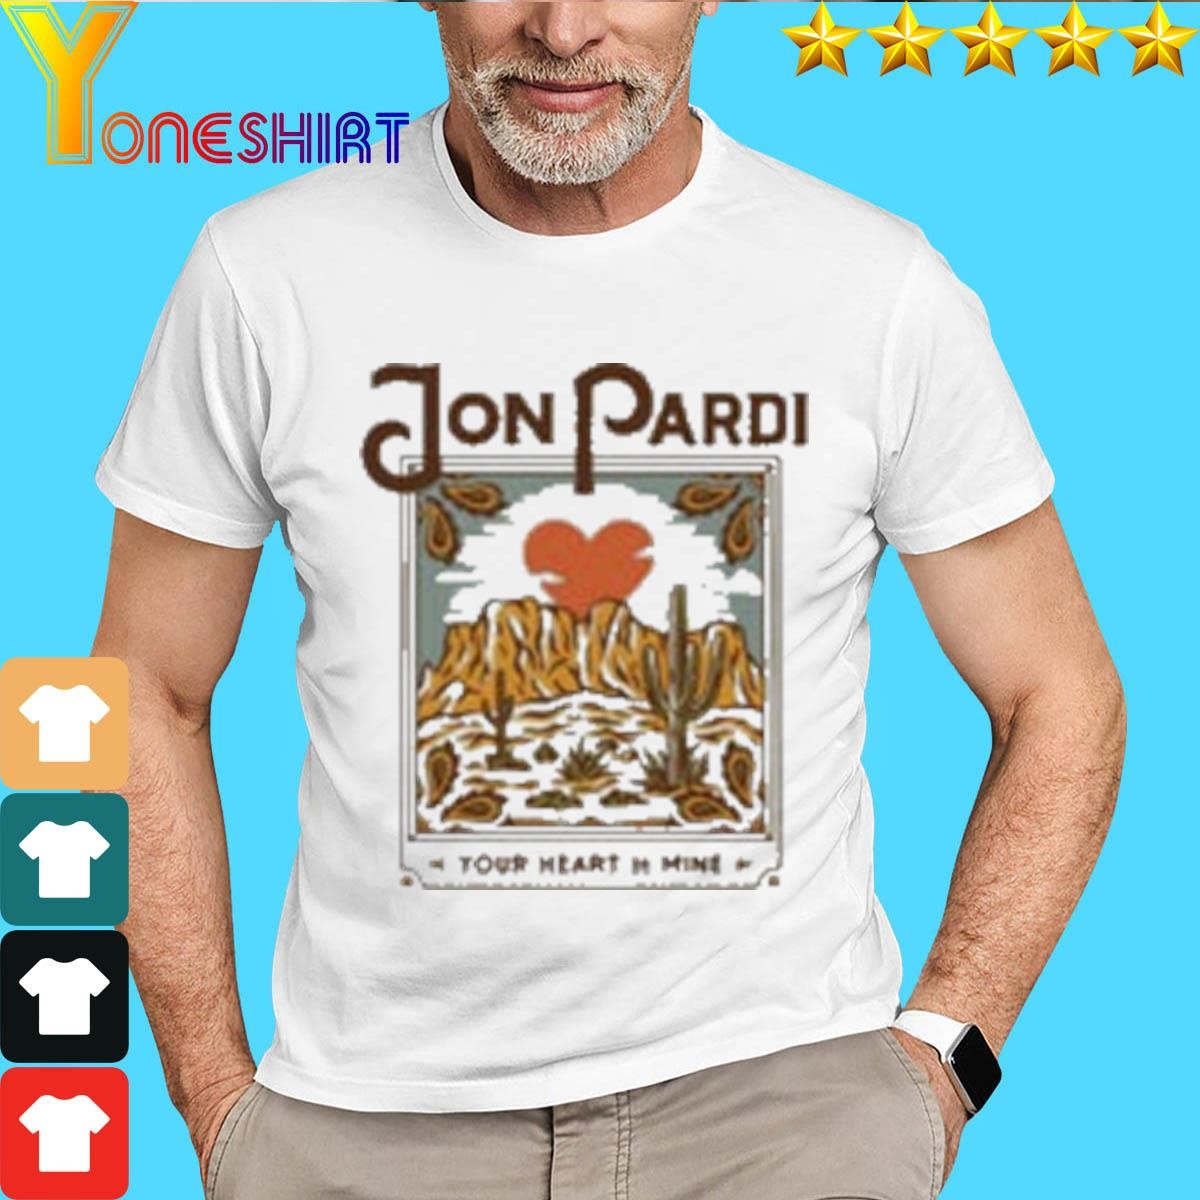 Jon Pardi Women’s Your Heart Or Mine Shirt